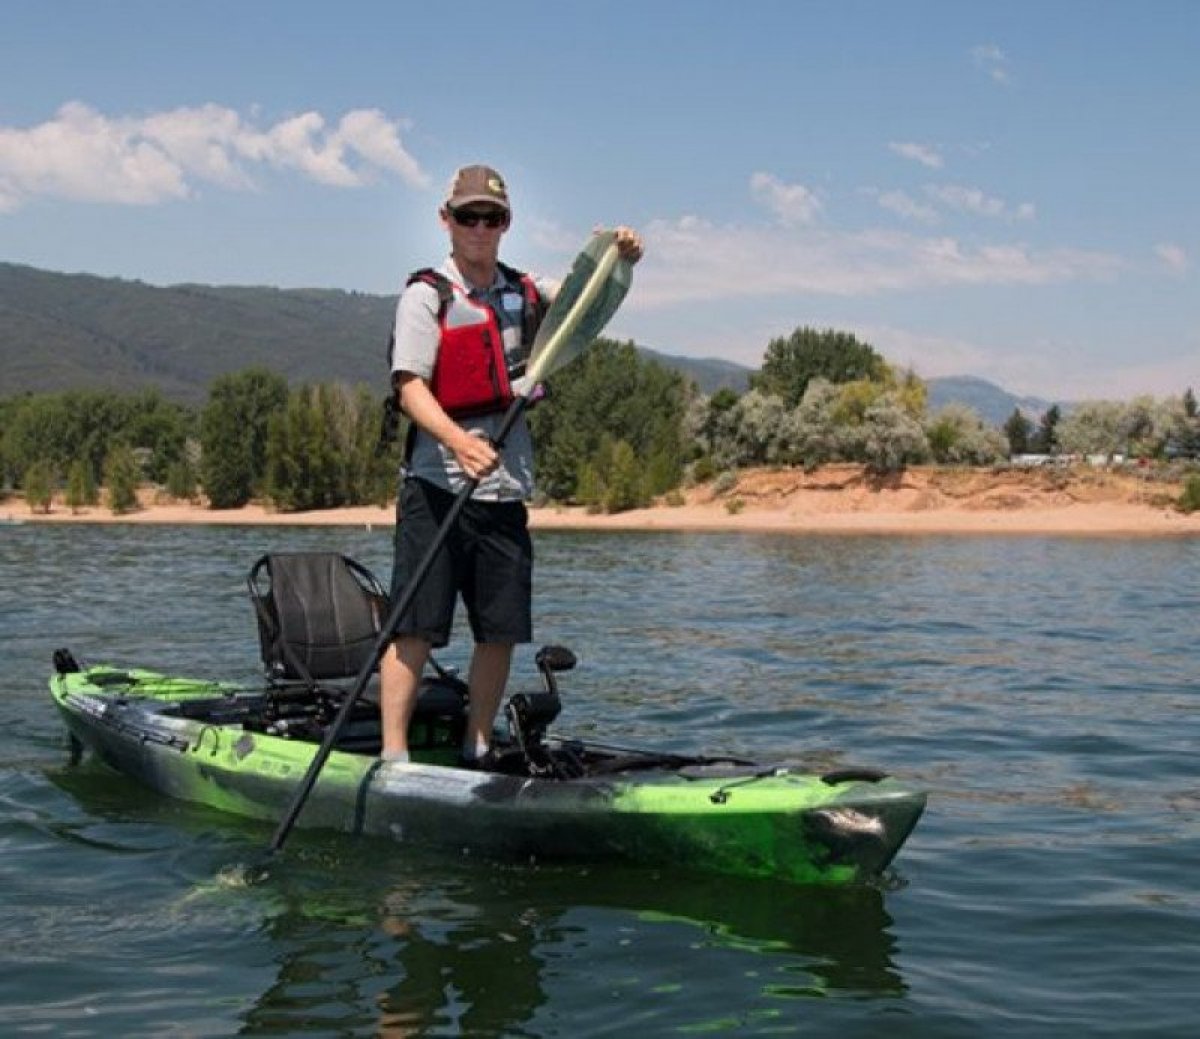 Brand New Wilderness Systems Radar 115 Pedal Powered Fishing Kayak